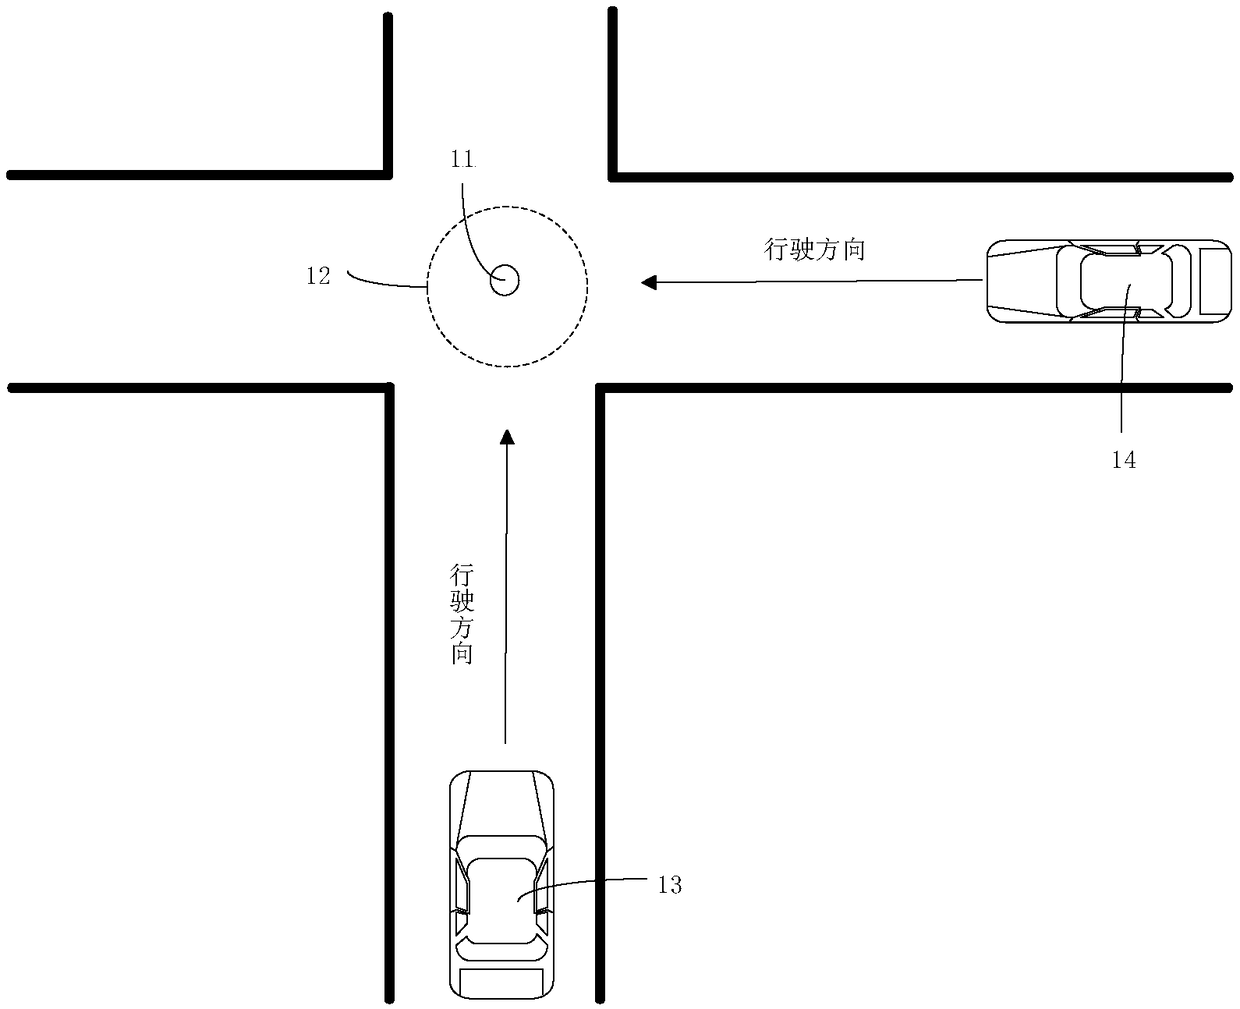 Vehicle intersection collision warning method